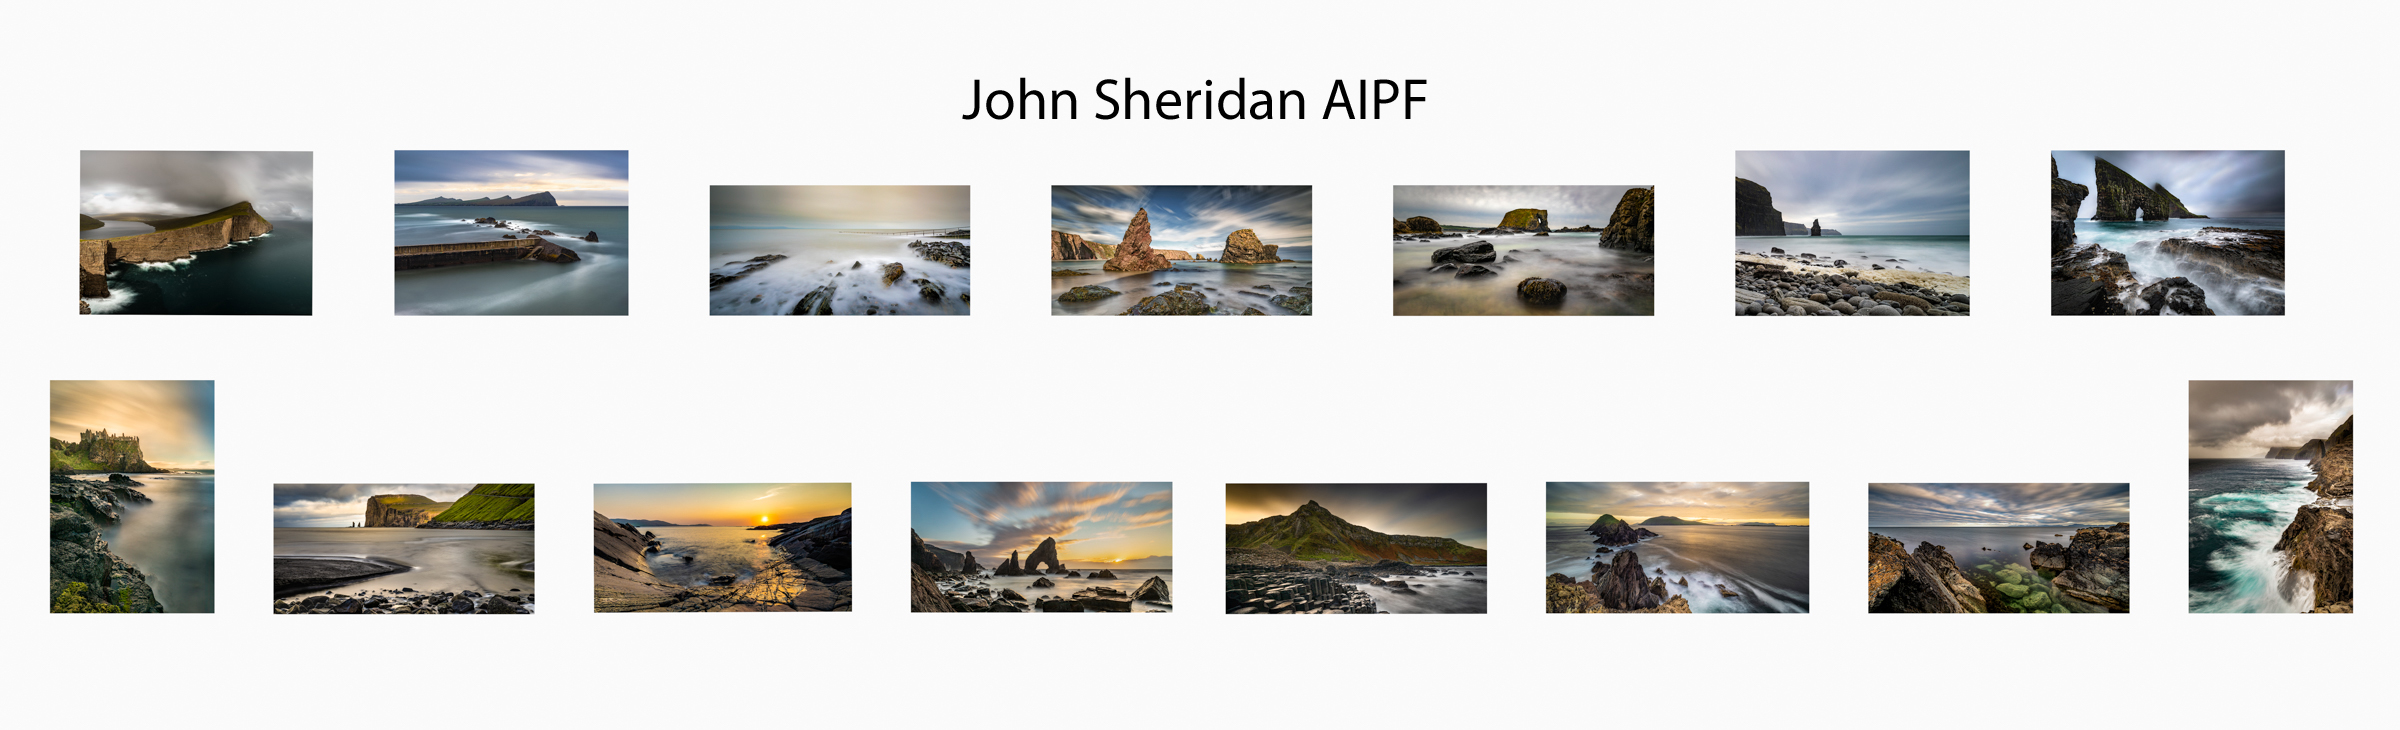 John Sheridan, AIPF, Drogheda Camera Club